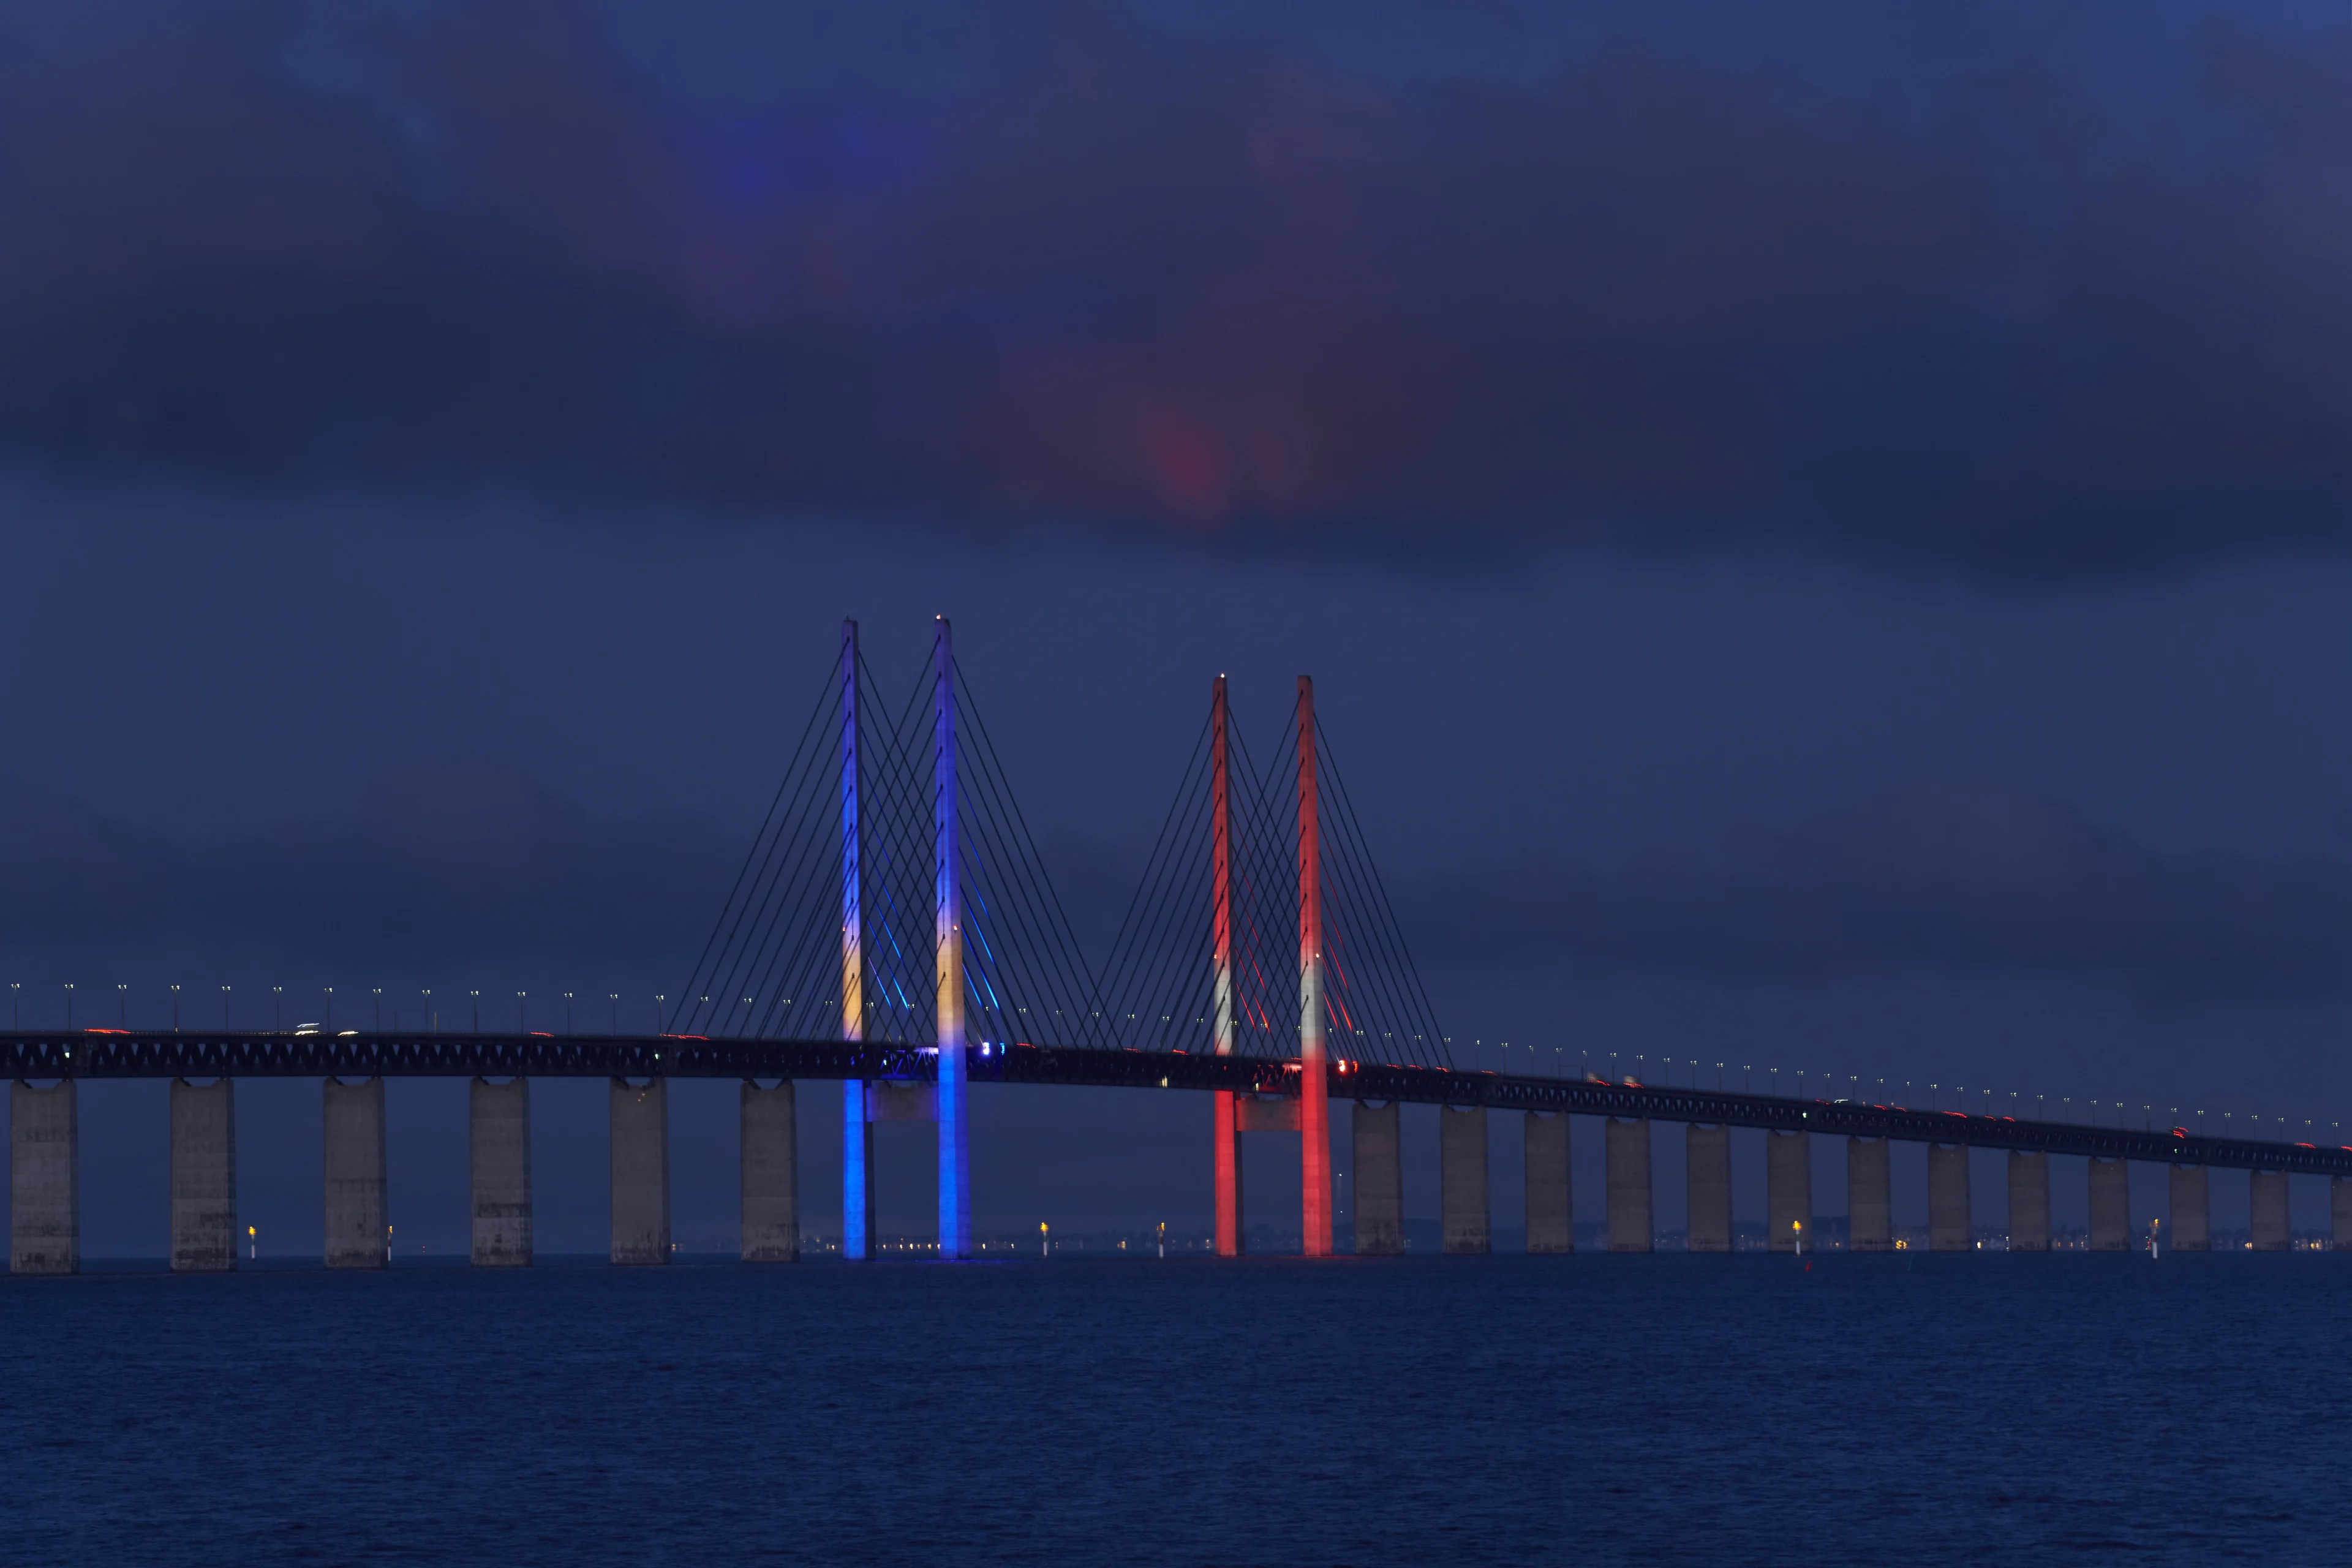 Øresundsbrons  pylonbelysning i farverne fra det svenske og danske flag - blå, gul, rød og hvid.